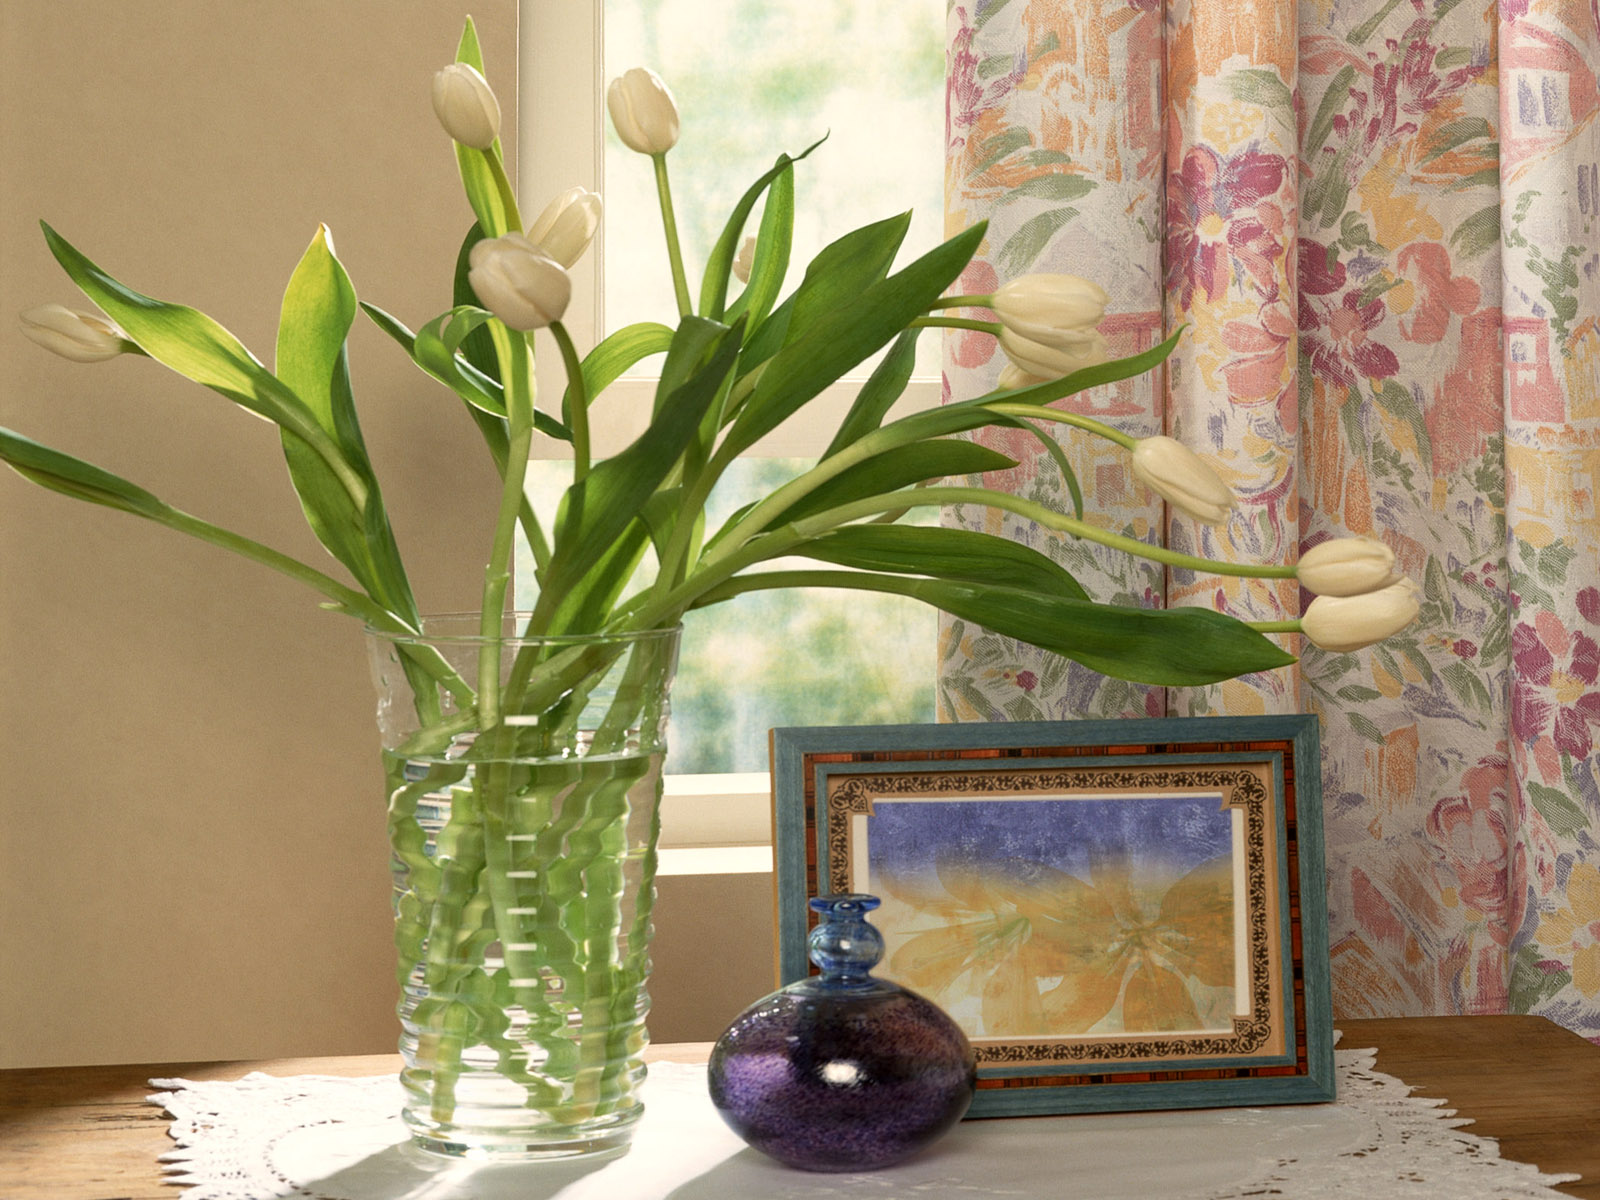 Тюльпаны в интерьере. Тюльпаны в вазе. Букет тюльпанов в вазе. Тюльпаны в вазе в интерьере. Цветы в вазе в интерьере.